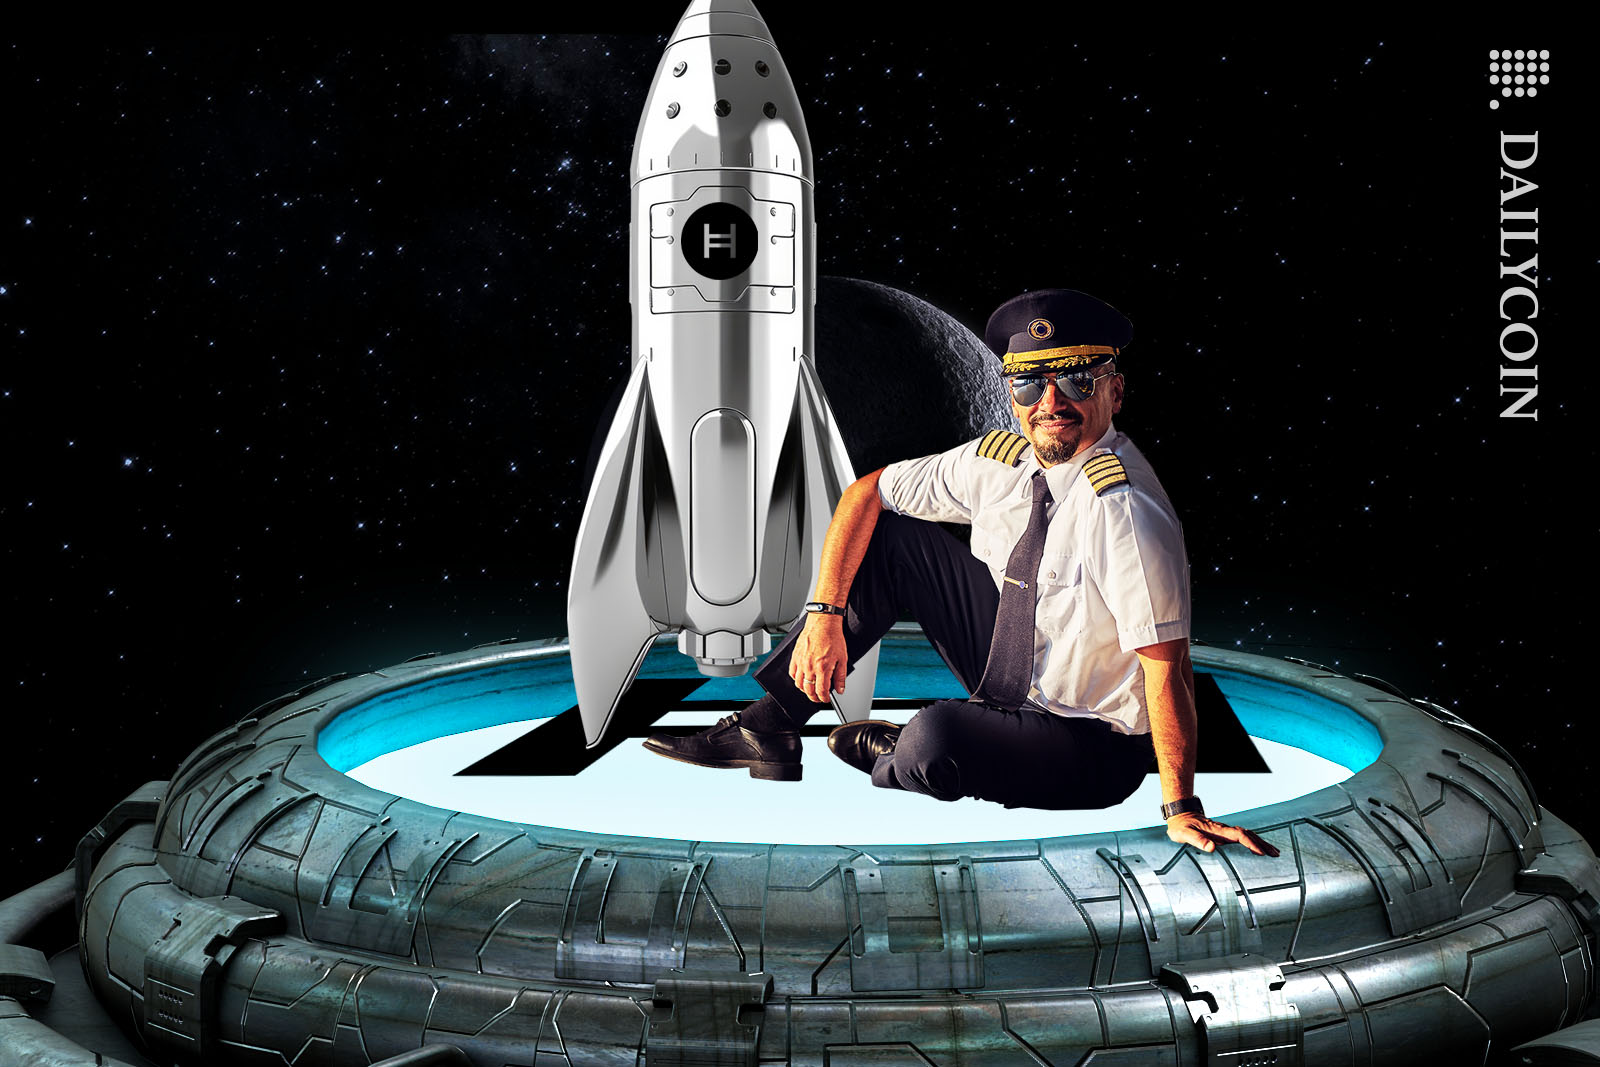 Pilot sitting next to a chrome Hedera rocket on a futuristic platform.